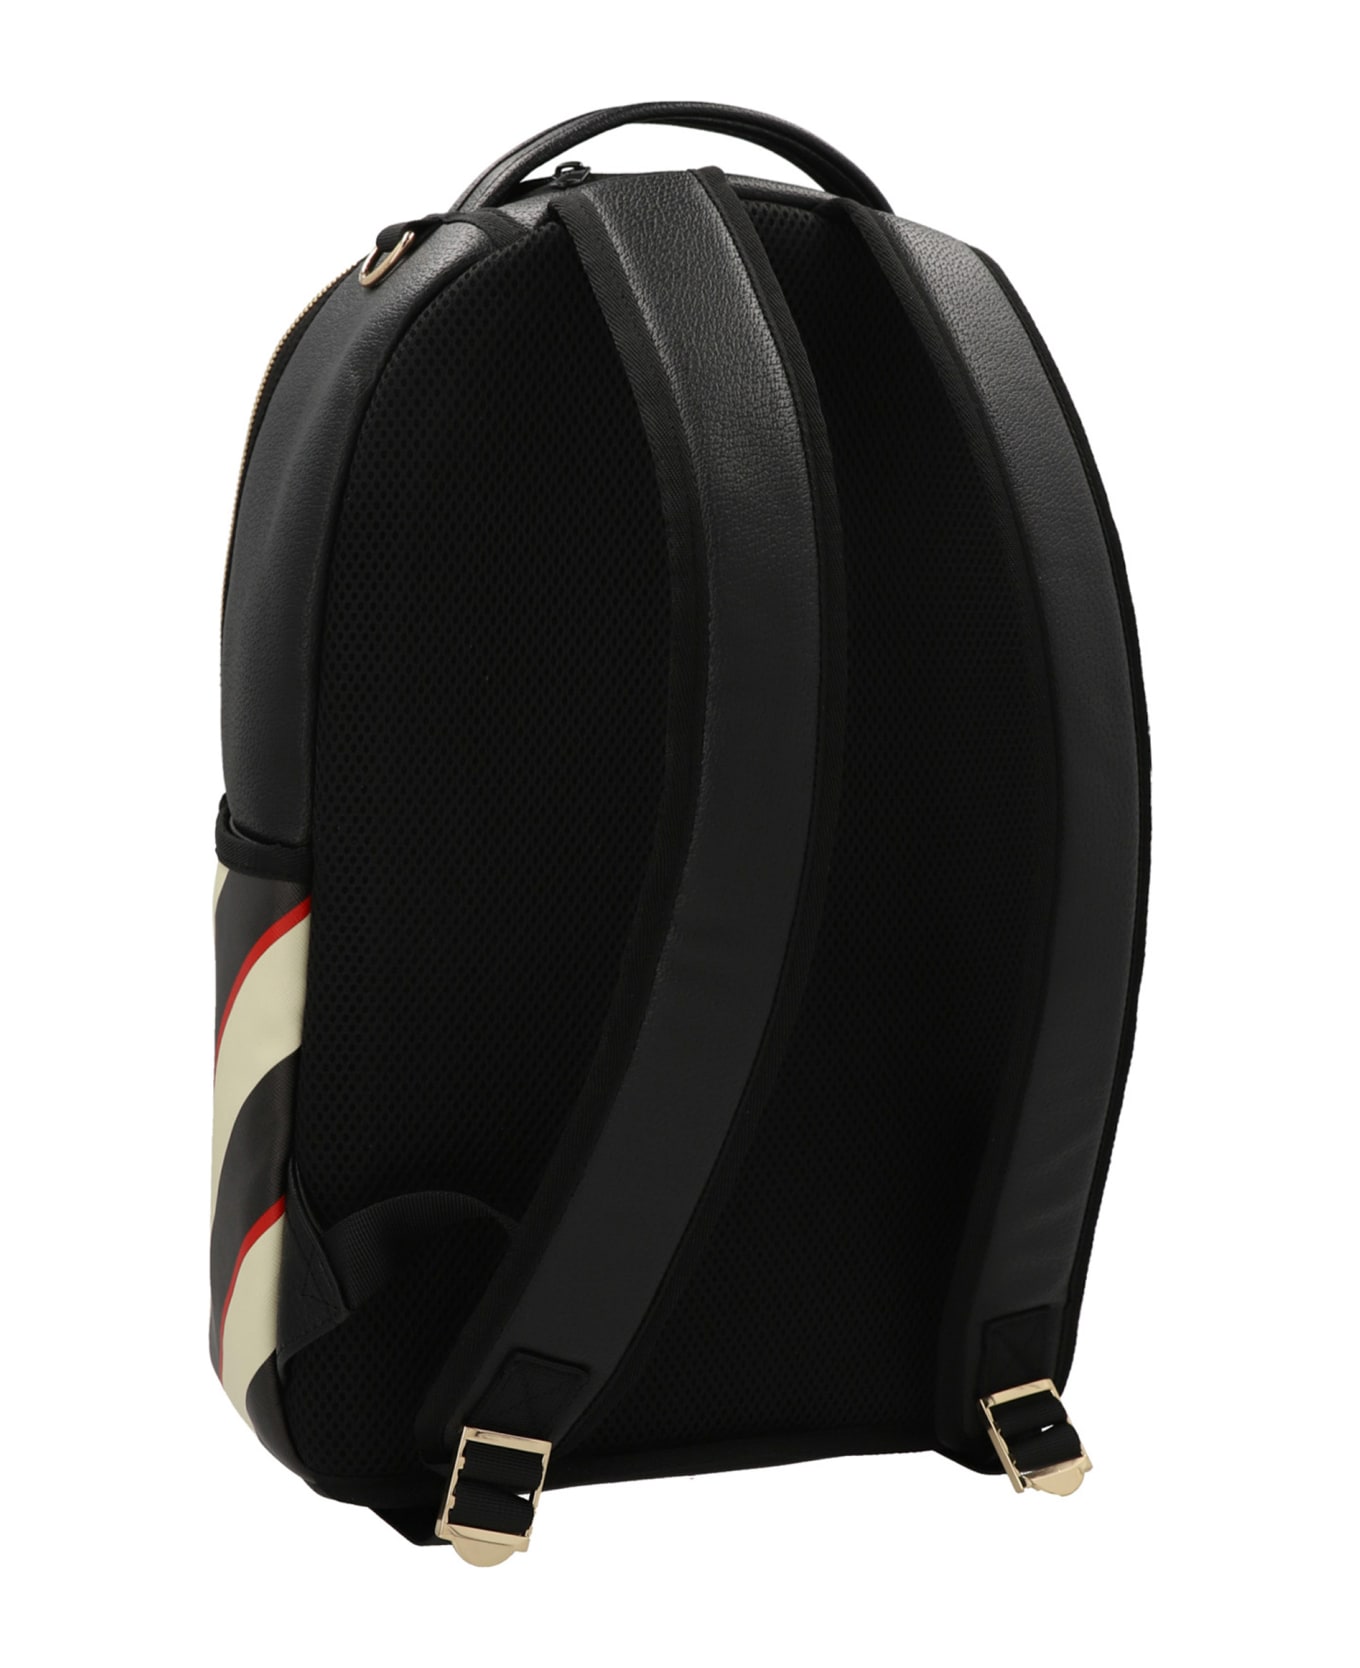 Seletti 'lipstick Black' Septic X Toiletpaper Backpack - White/Black